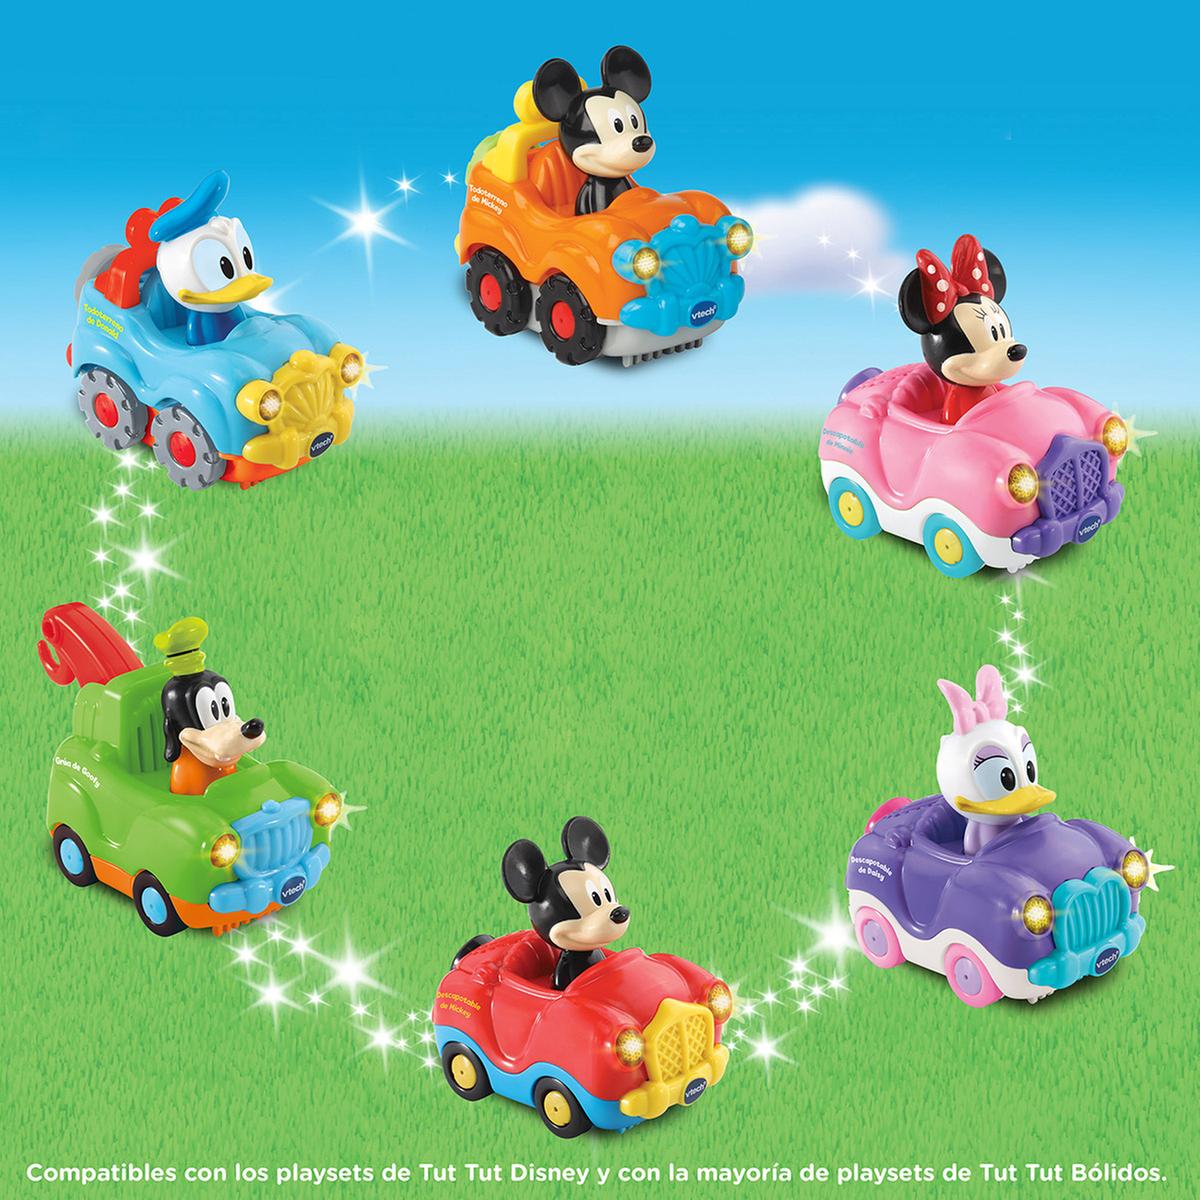 VTech Tut Tut Bolides Vehicules Mickey Et SES Amis Assortis vehículo de Juguete 1 año Niño/niña 3 año AAA Francés s Vehículos de Juguete s 